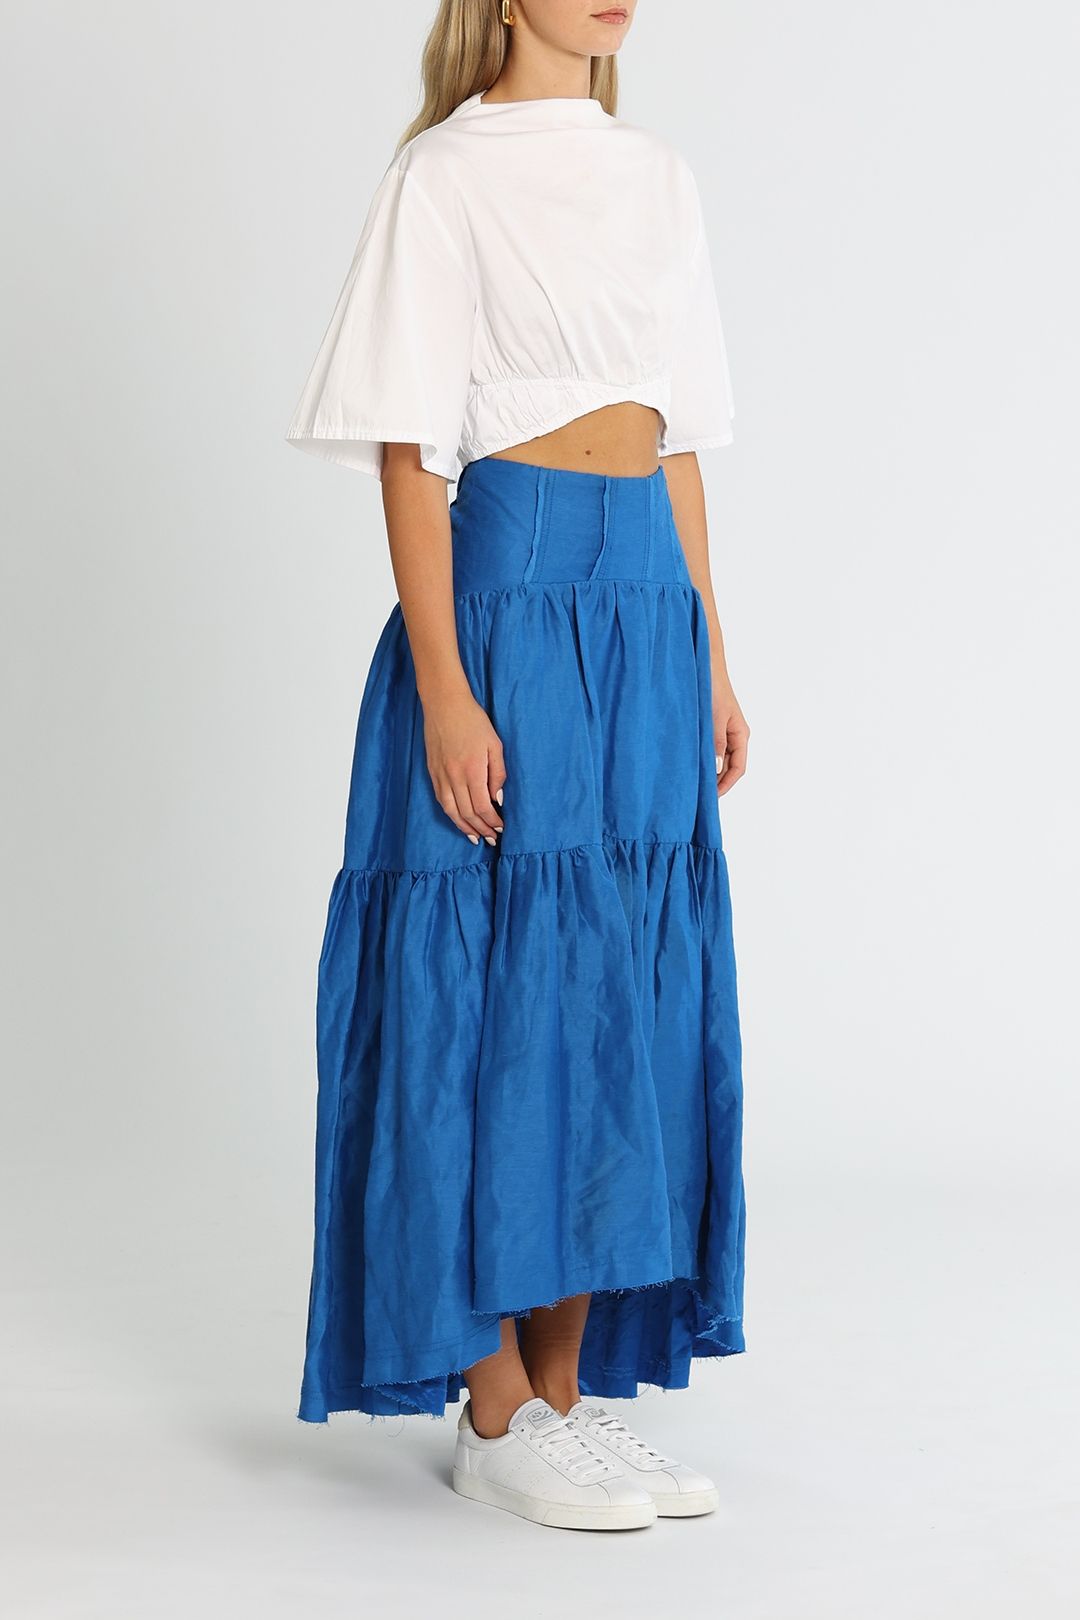 AJE Reverb Gathered Midi Skirt Cobalt Blue High Low